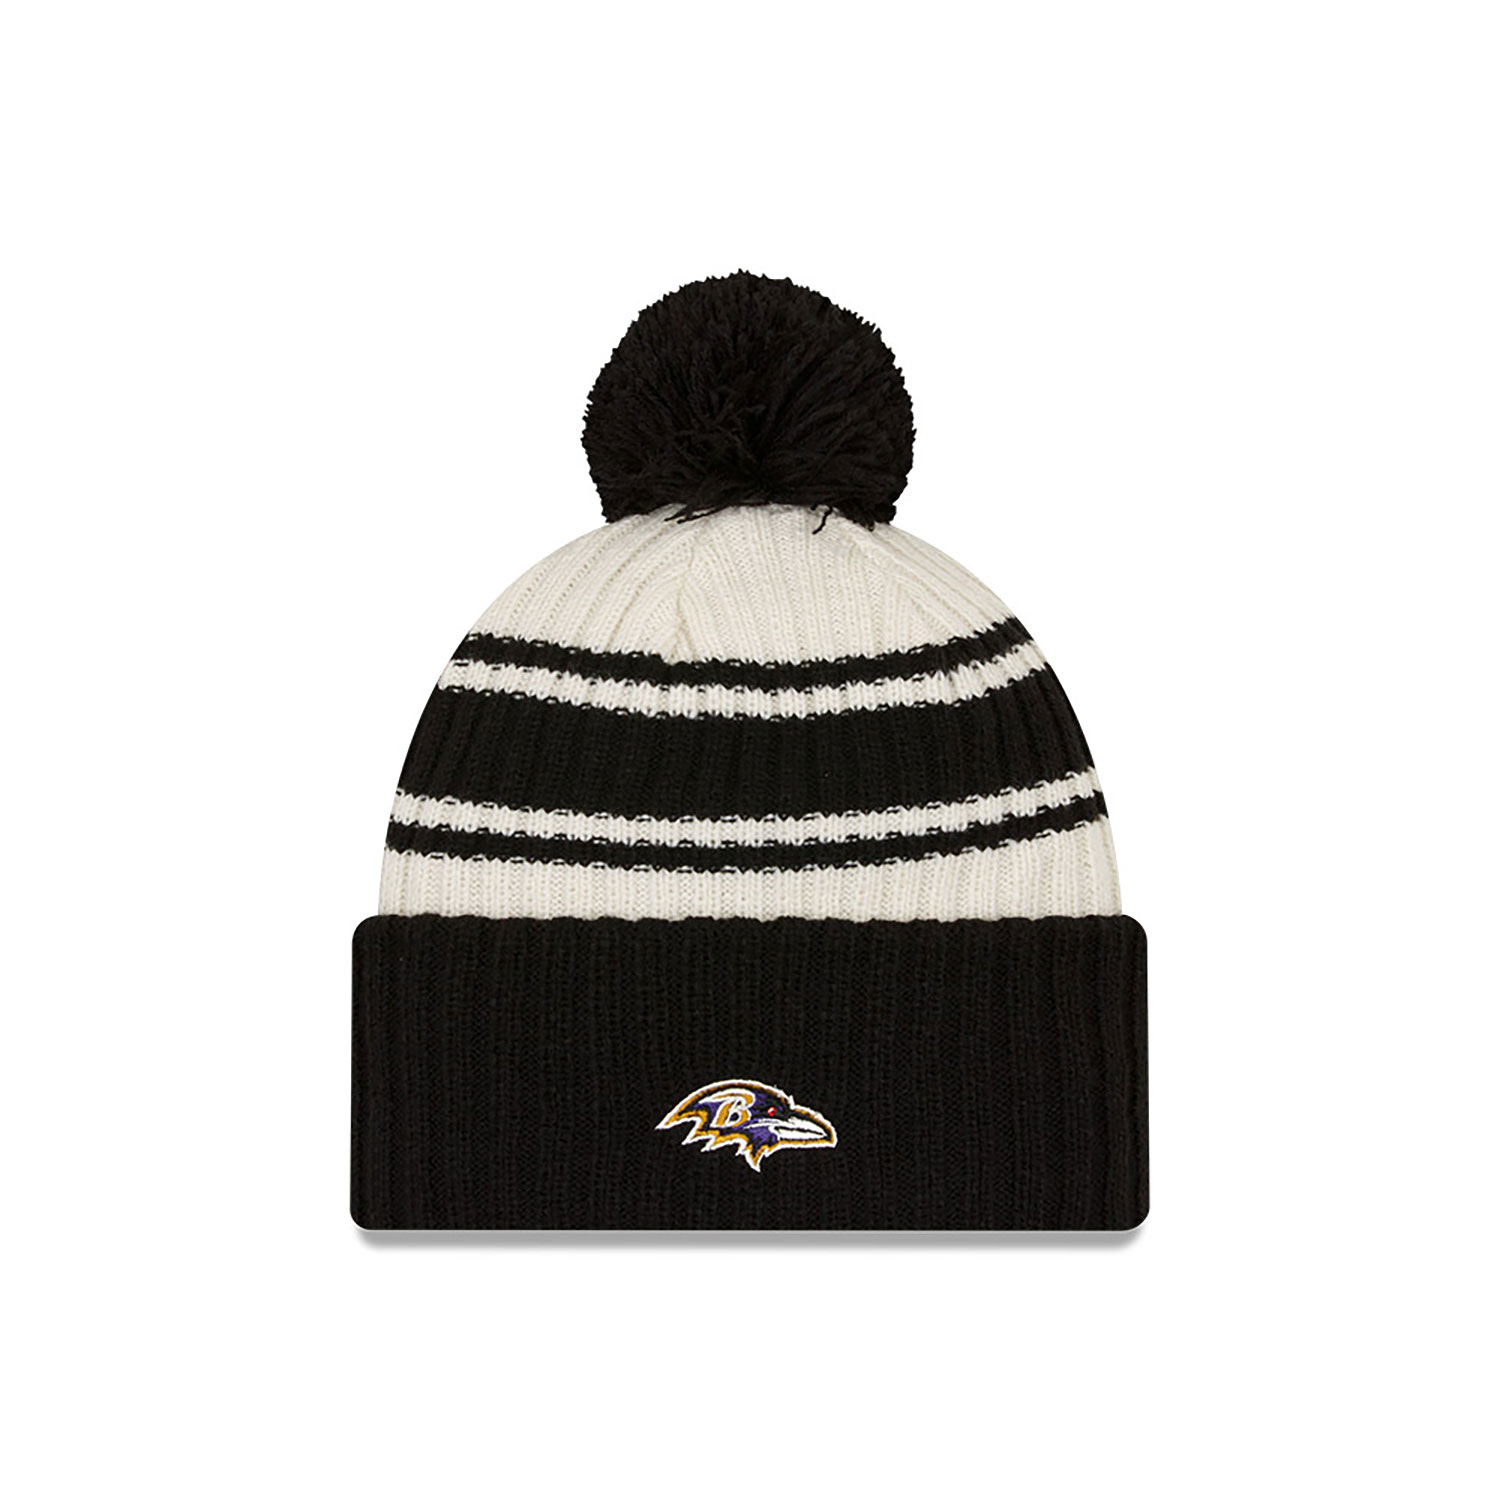 Baltimore Ravens NFL Sideline Black Beanie Hat